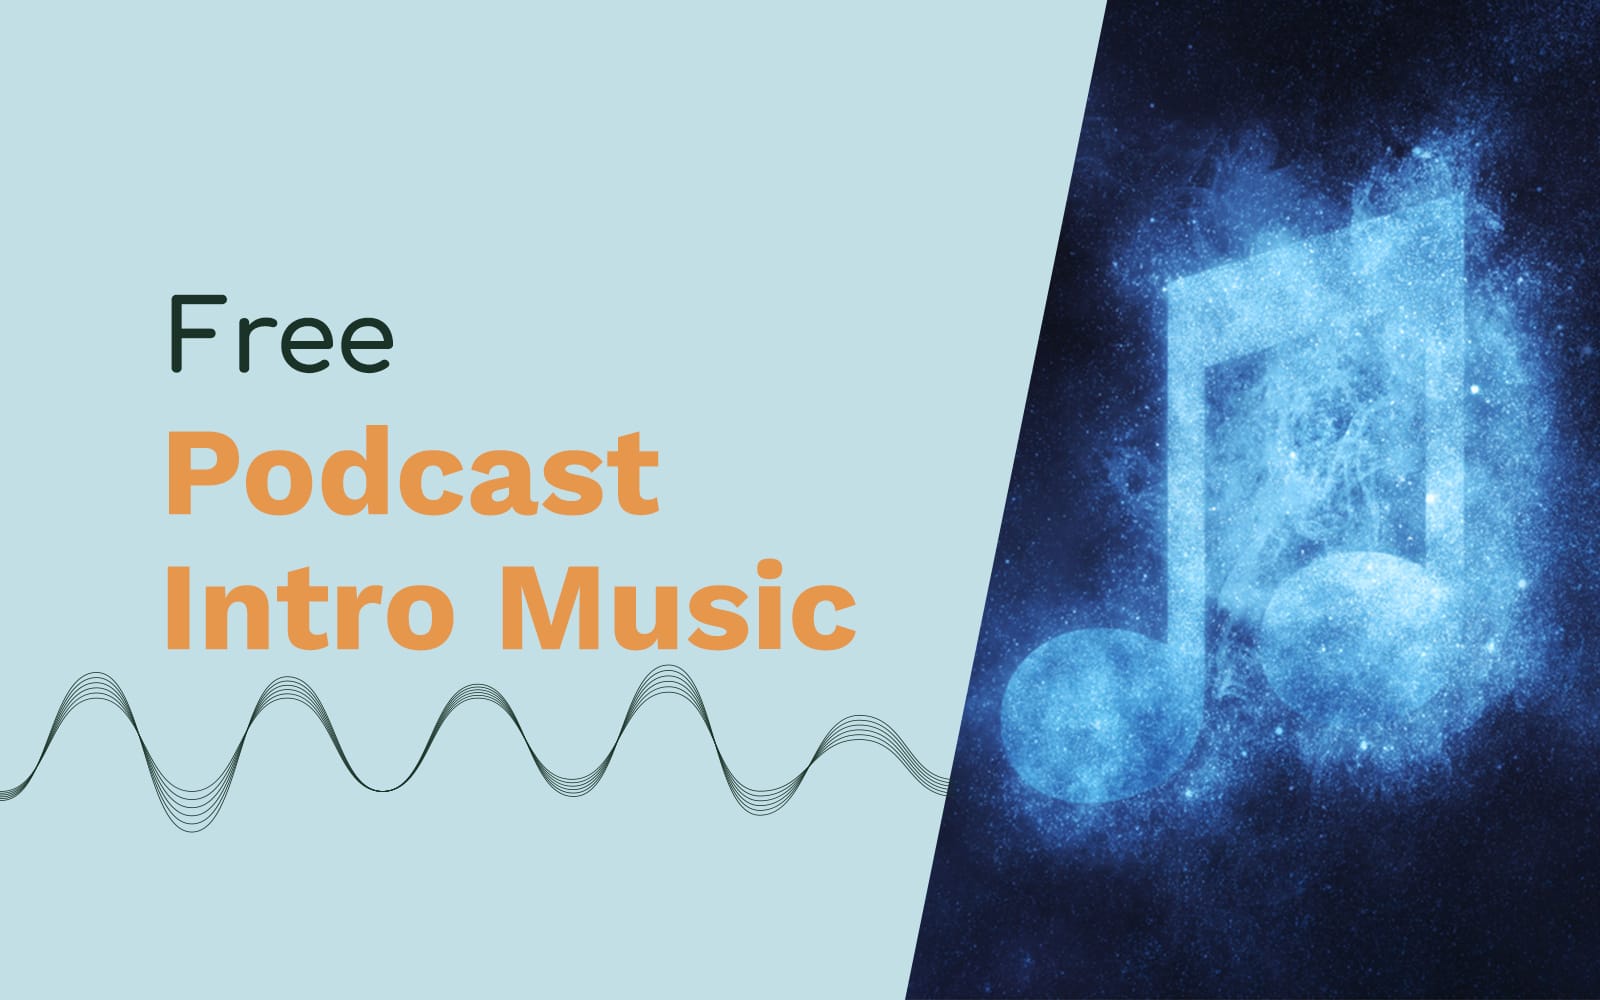 Free Podcast Intro Music Free Jingles podcast intro music Music Radio Creative